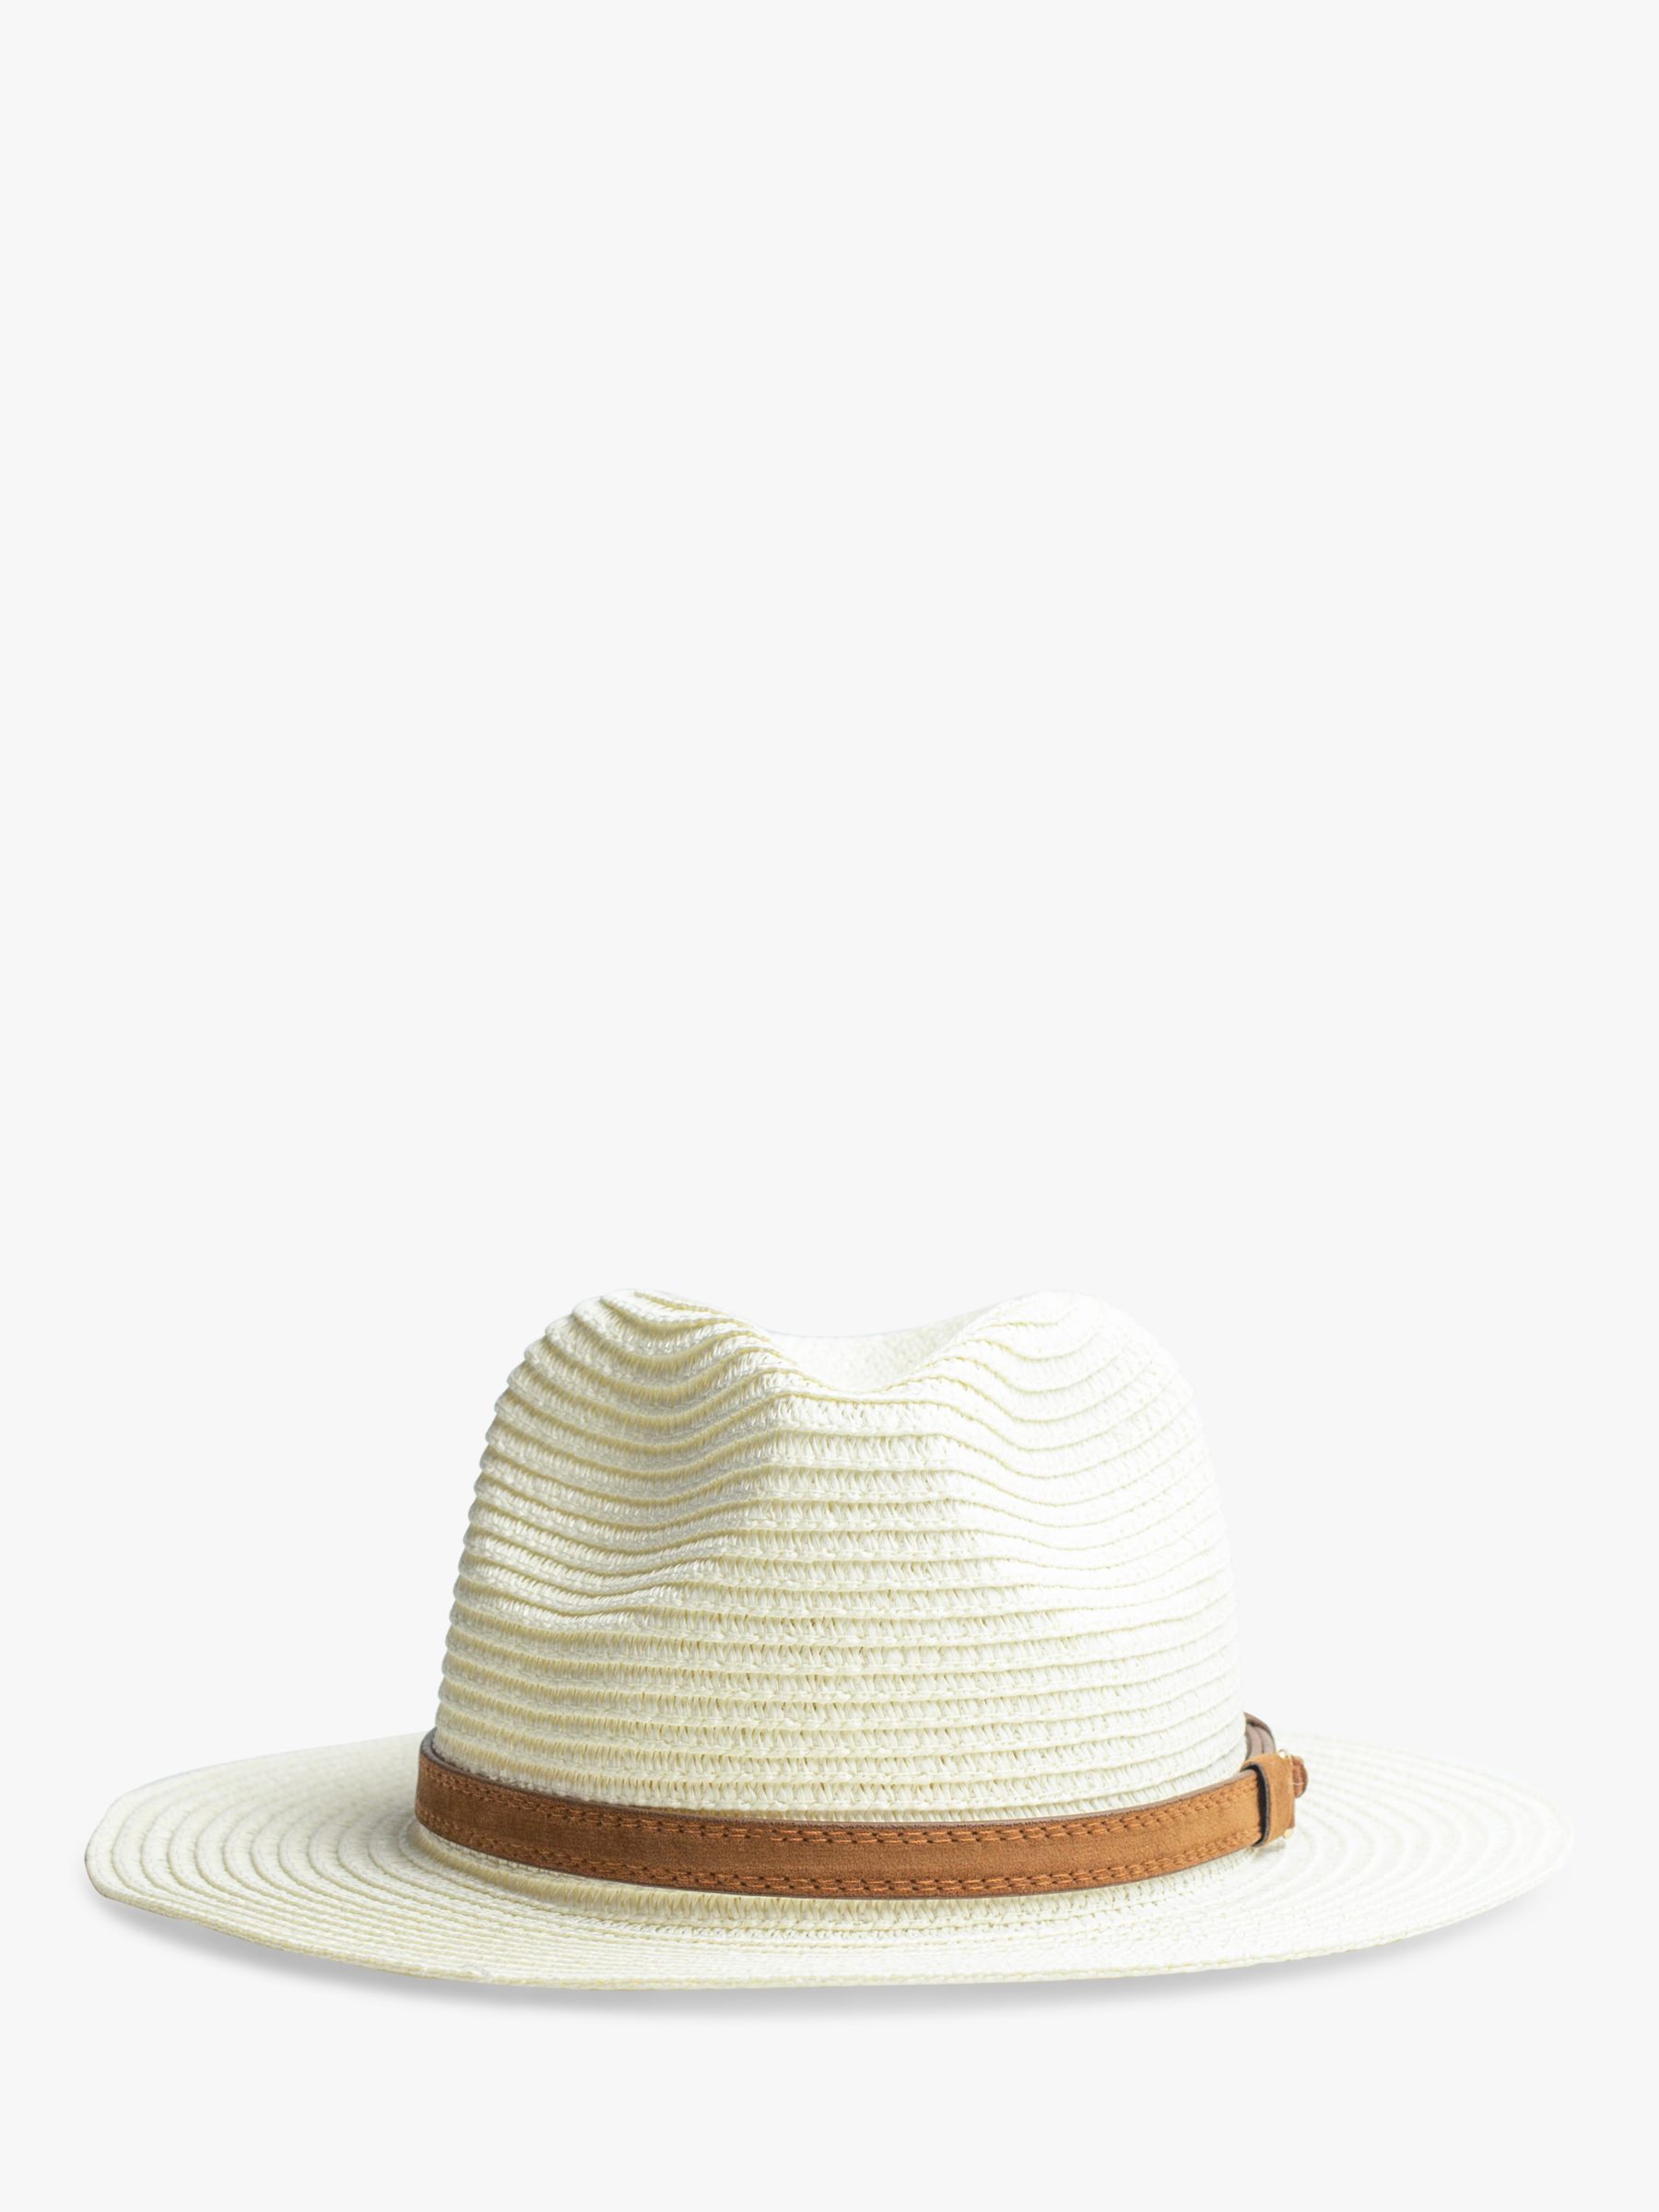 Bloom & Bay Adva Straw Hat, Cream, One Size